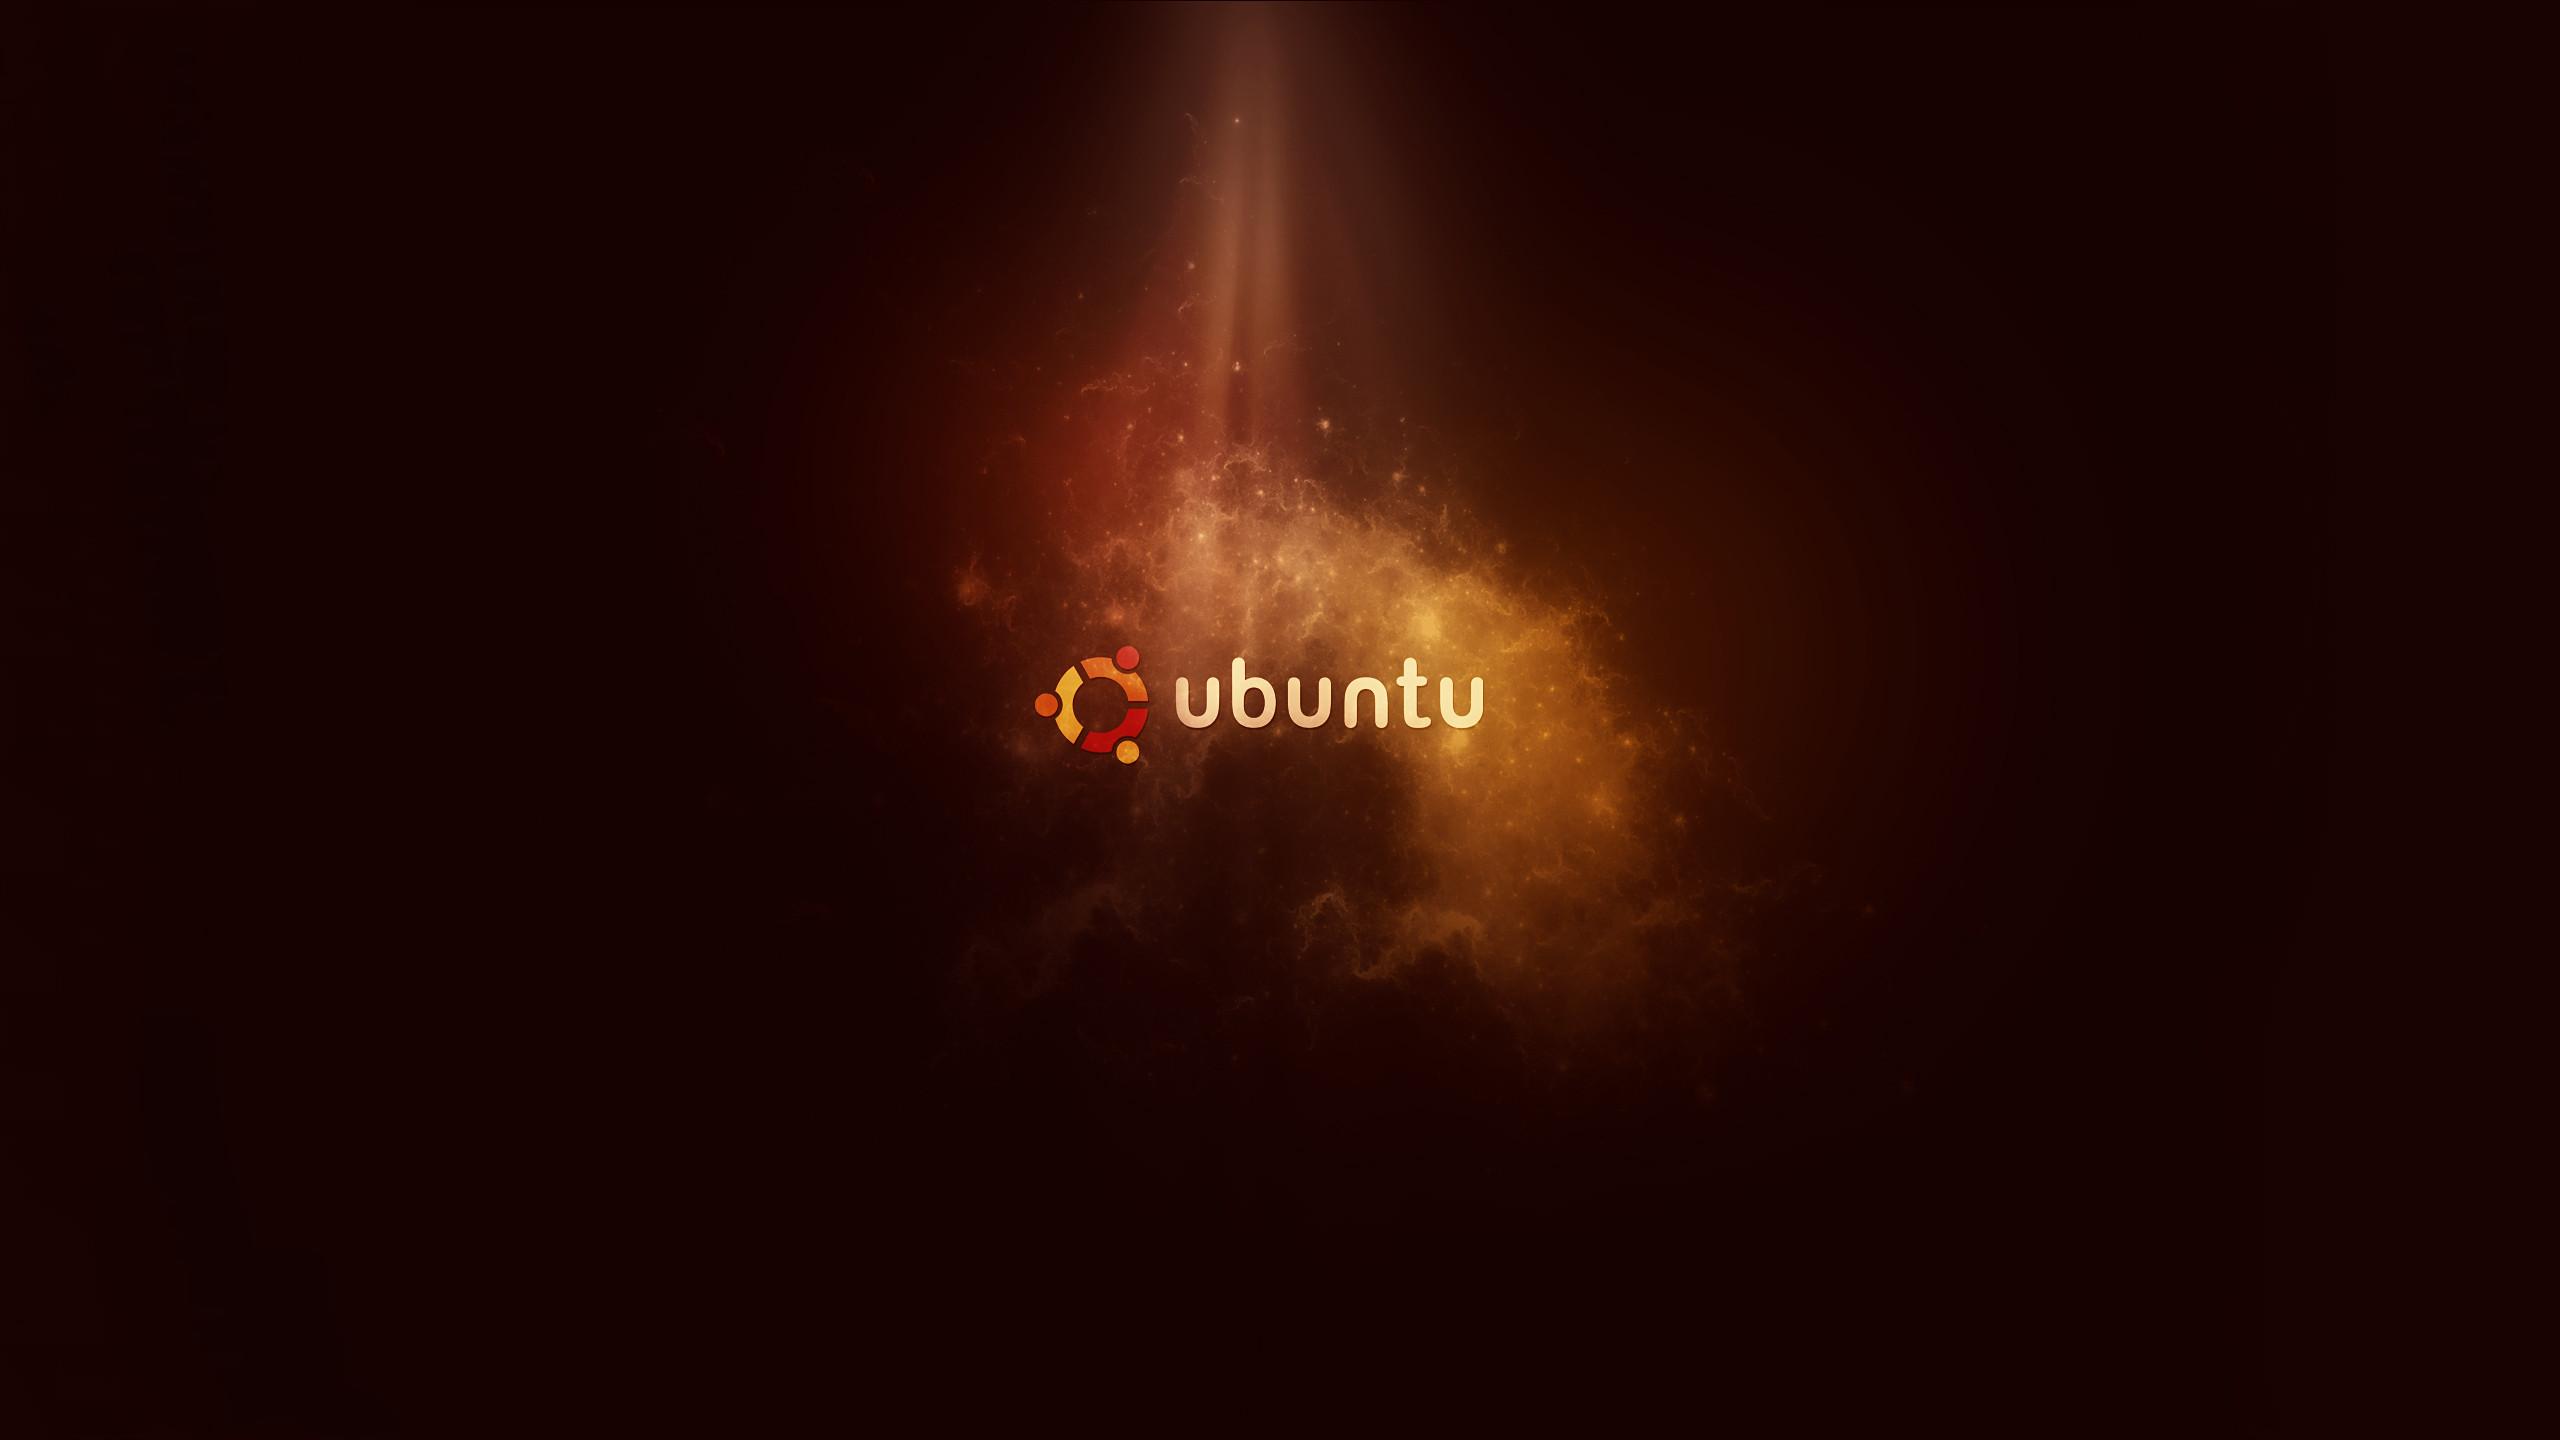 Ubuntu Backgrounds | Wallpapers, Backgrounds, Images, Art Photos.